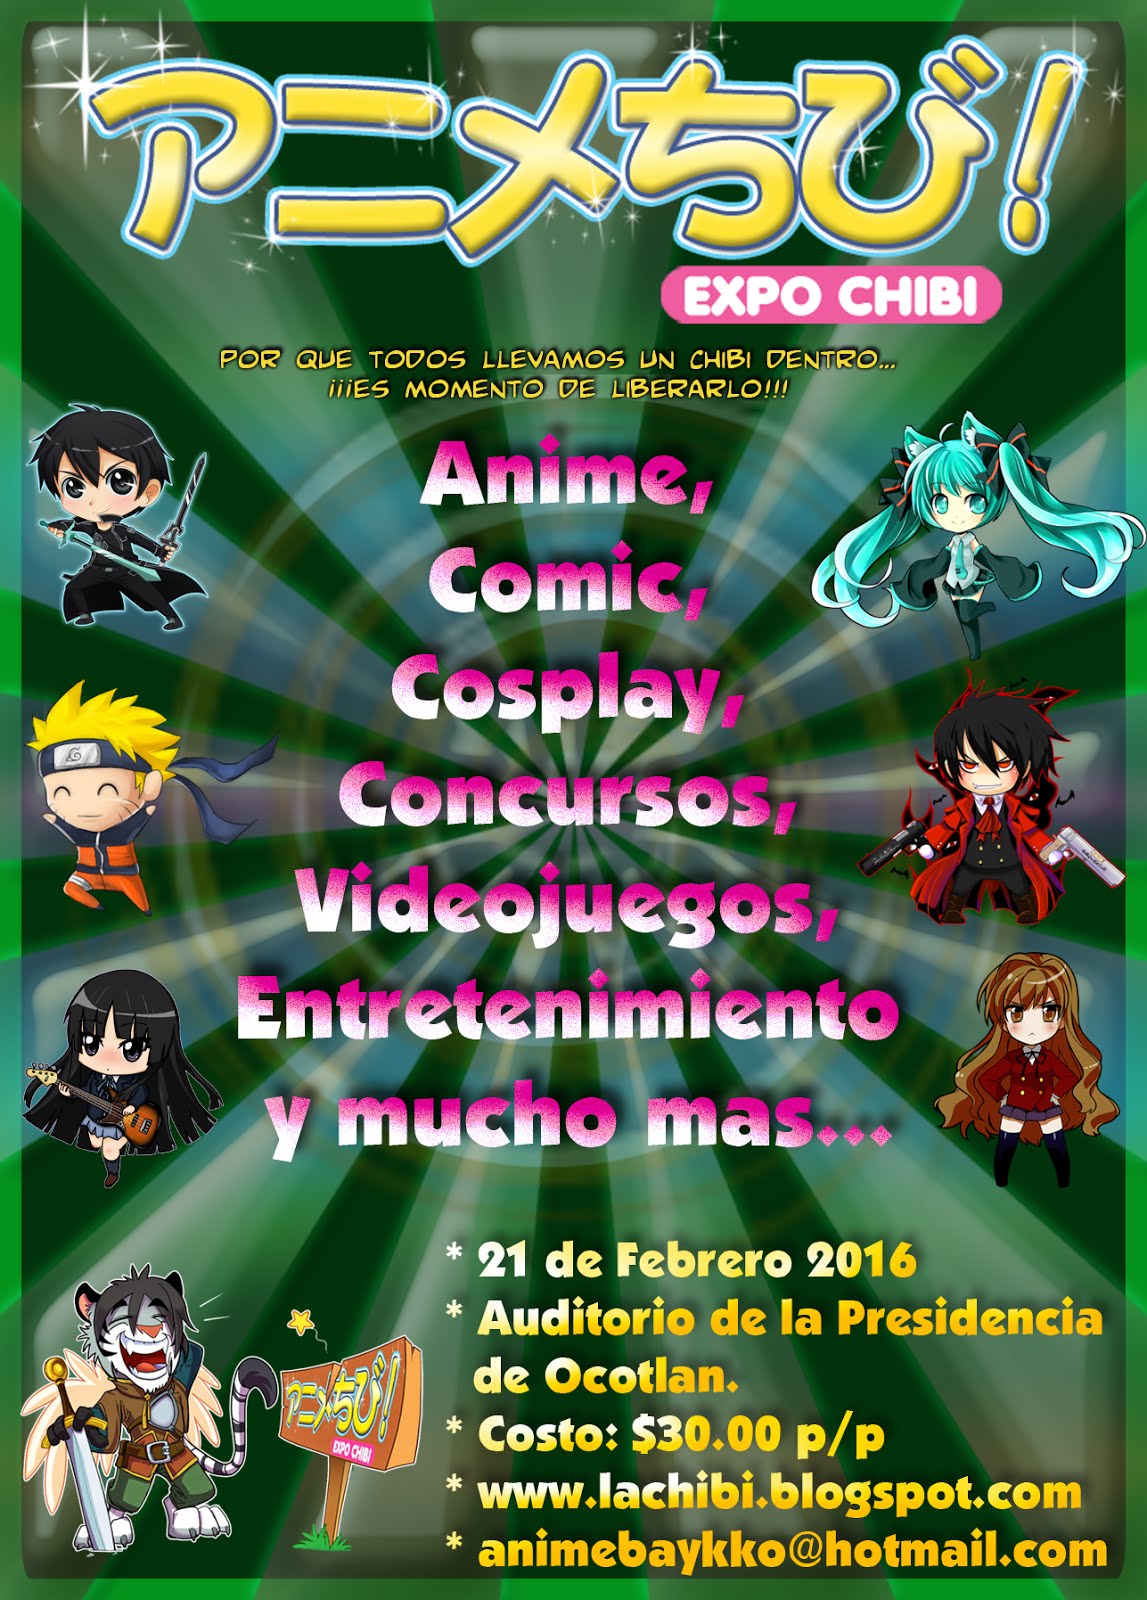 Feb16 - Expo Chibi